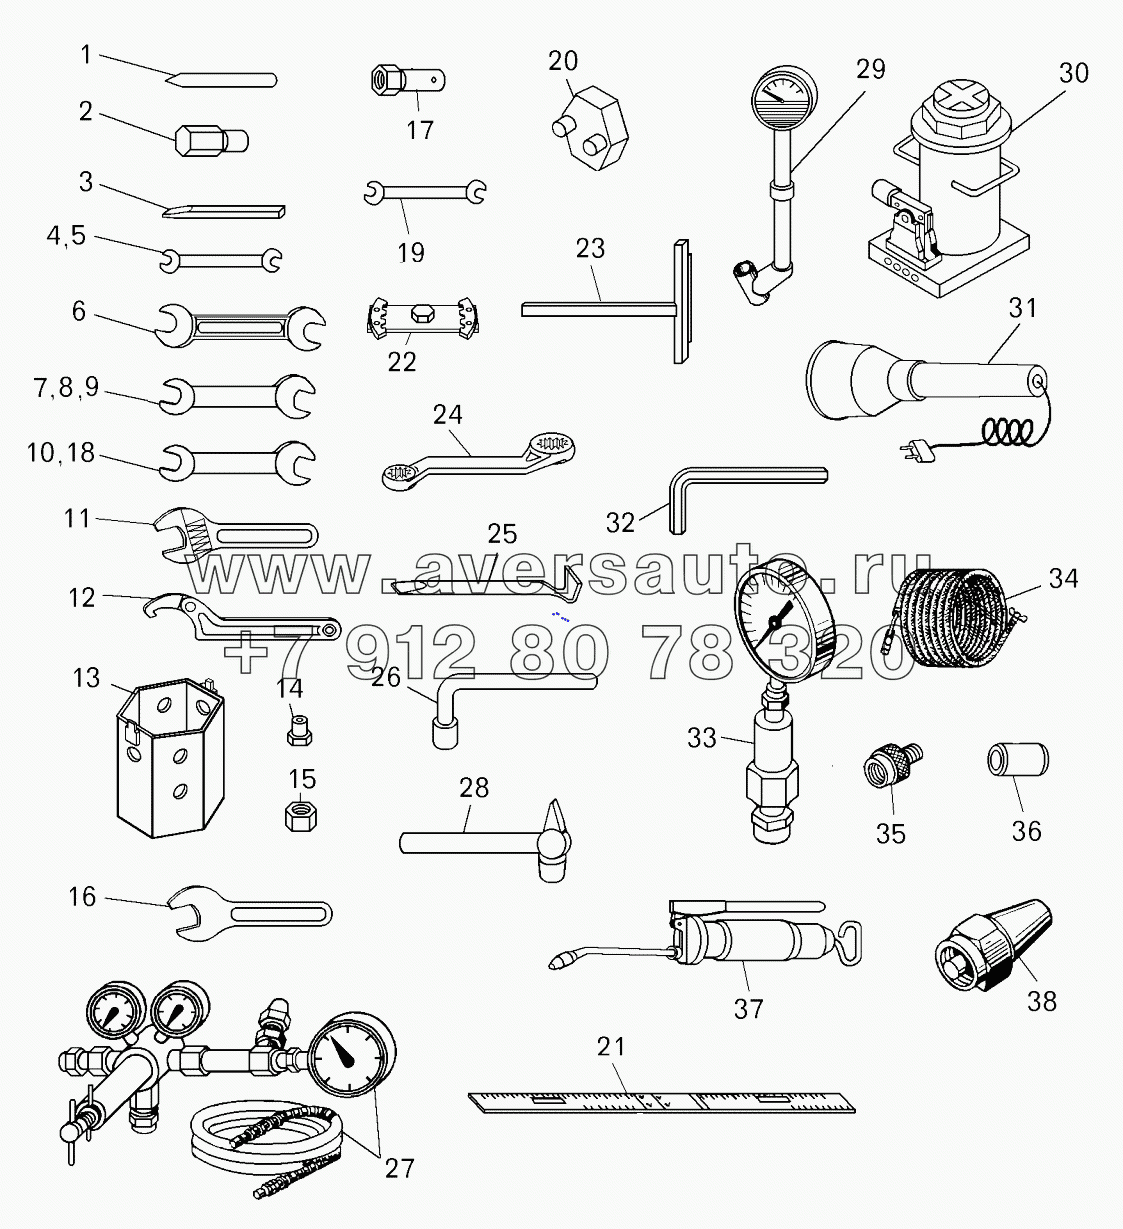  Комплект инструмента и принадлежностей;Tools and accessories kit